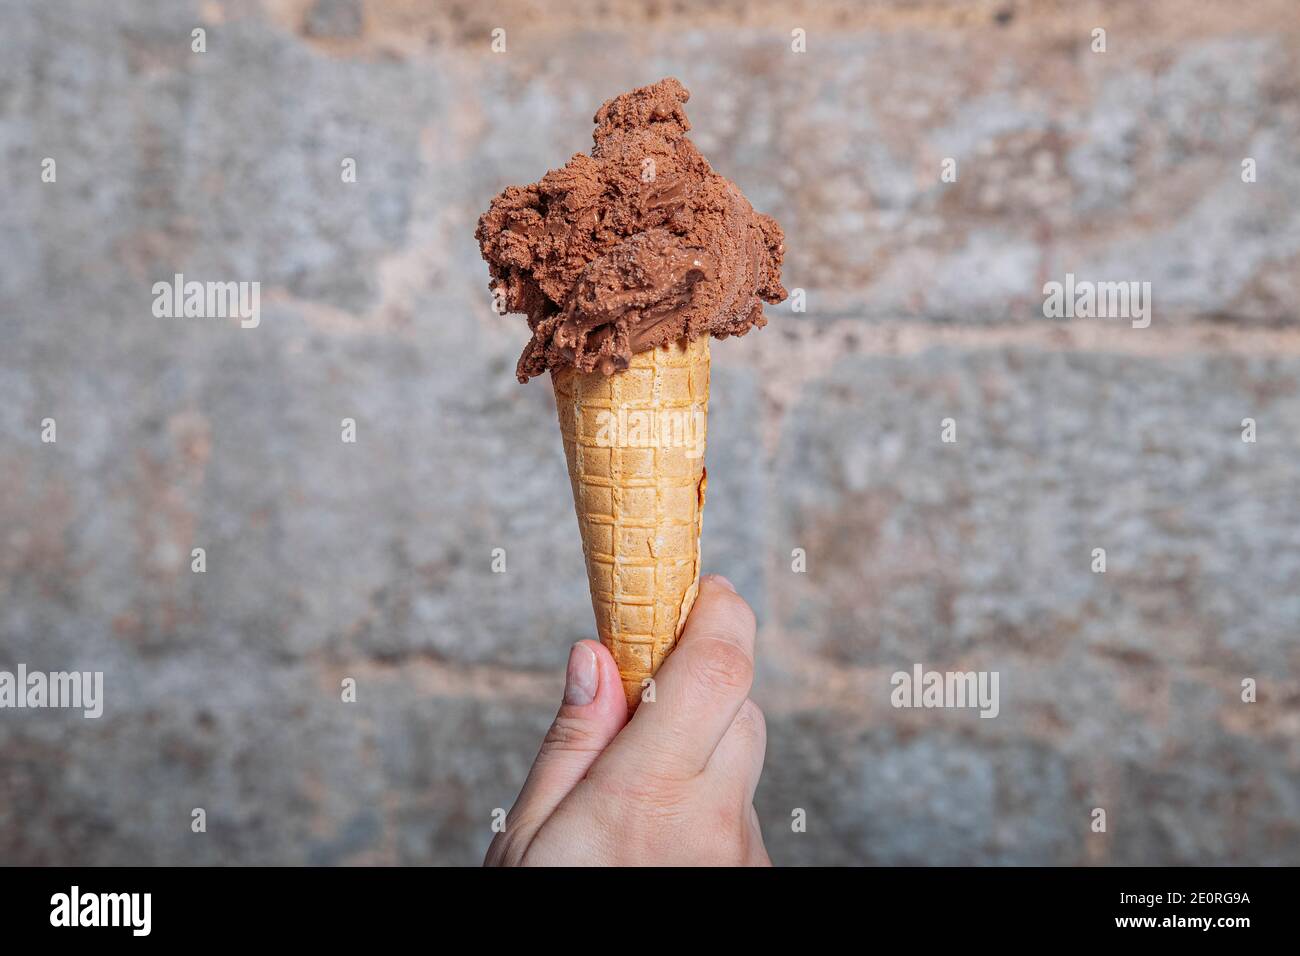 Hand holding chocolate ice cream cone. Chocolate ice cream in waffle cone Stock Photo